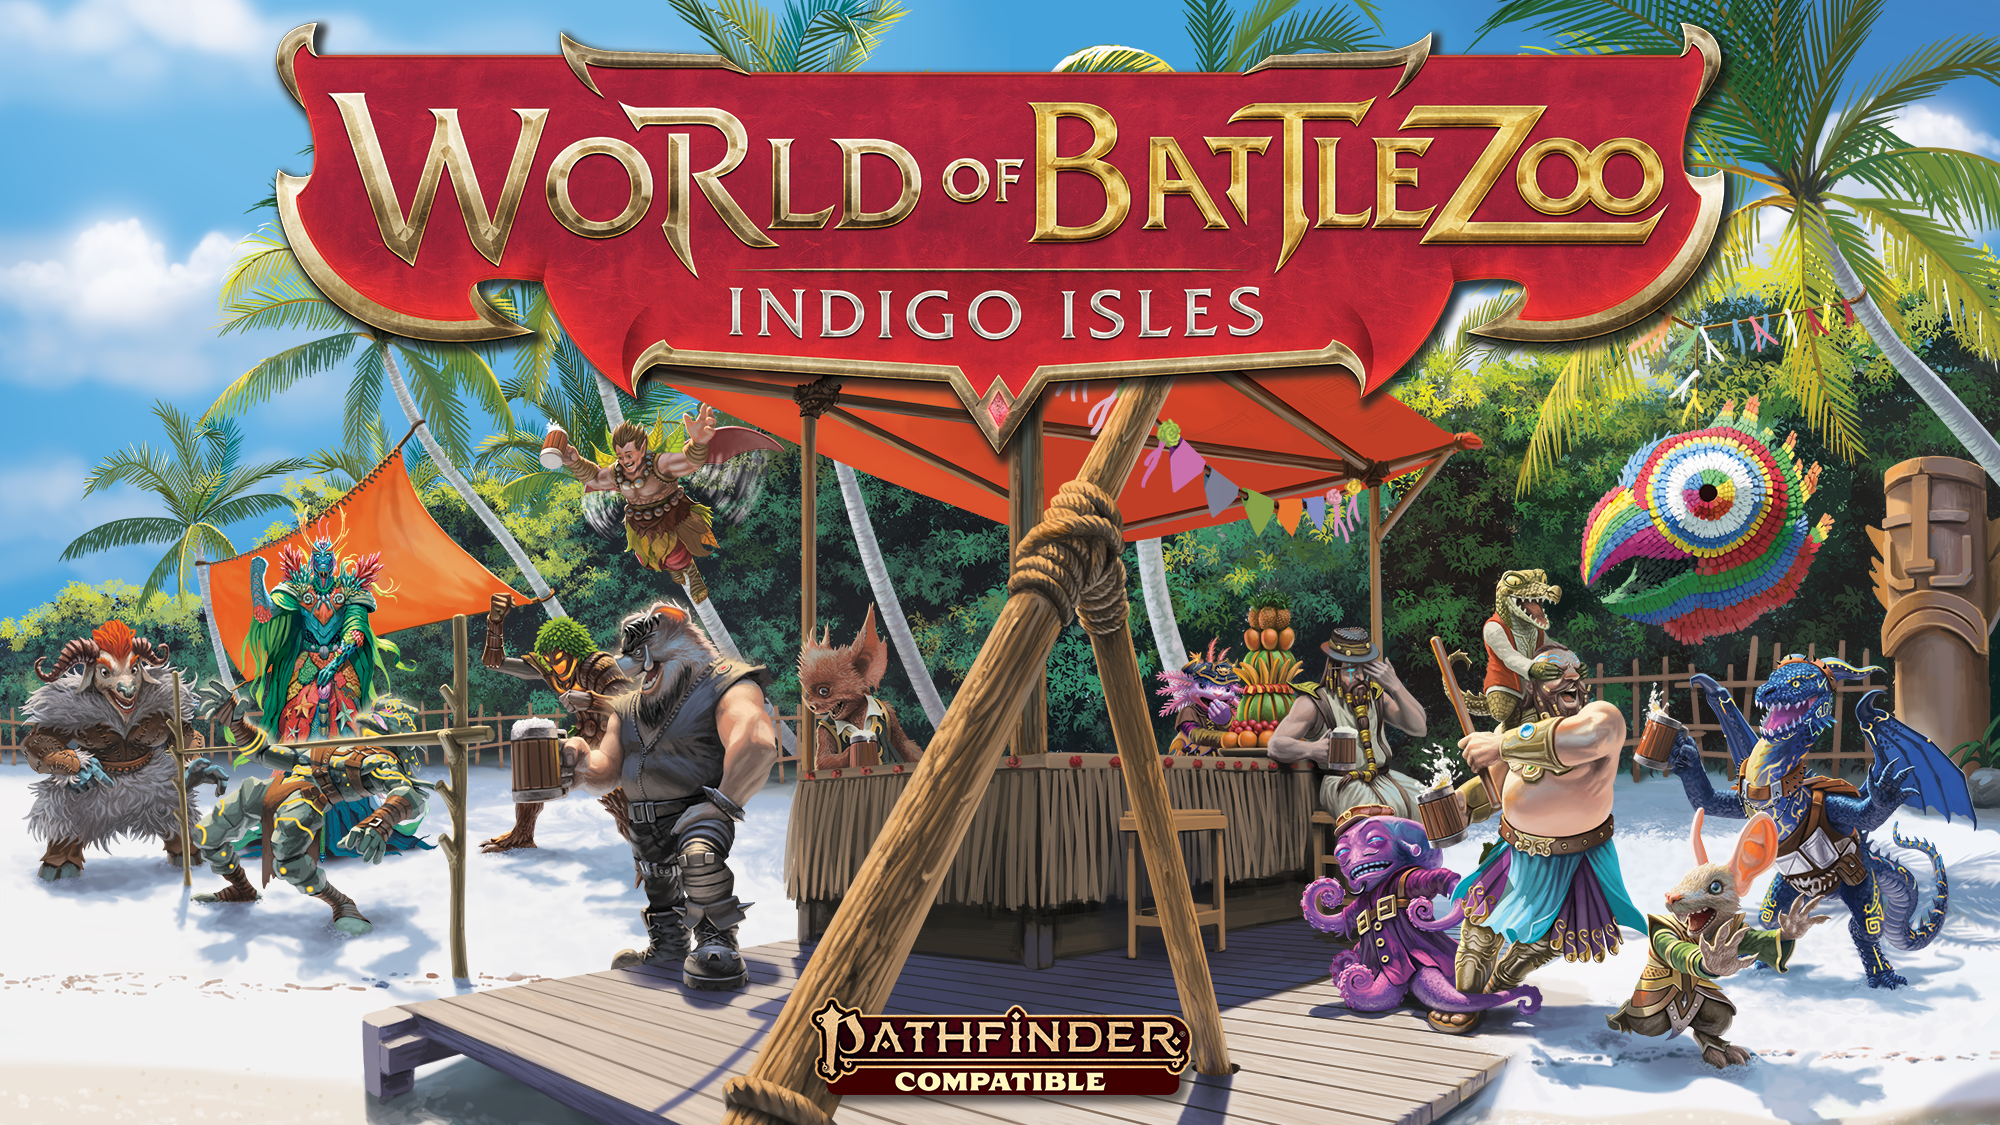 World of Battlezoo Indigo Isles Pathfinder Compatible Kickstarter